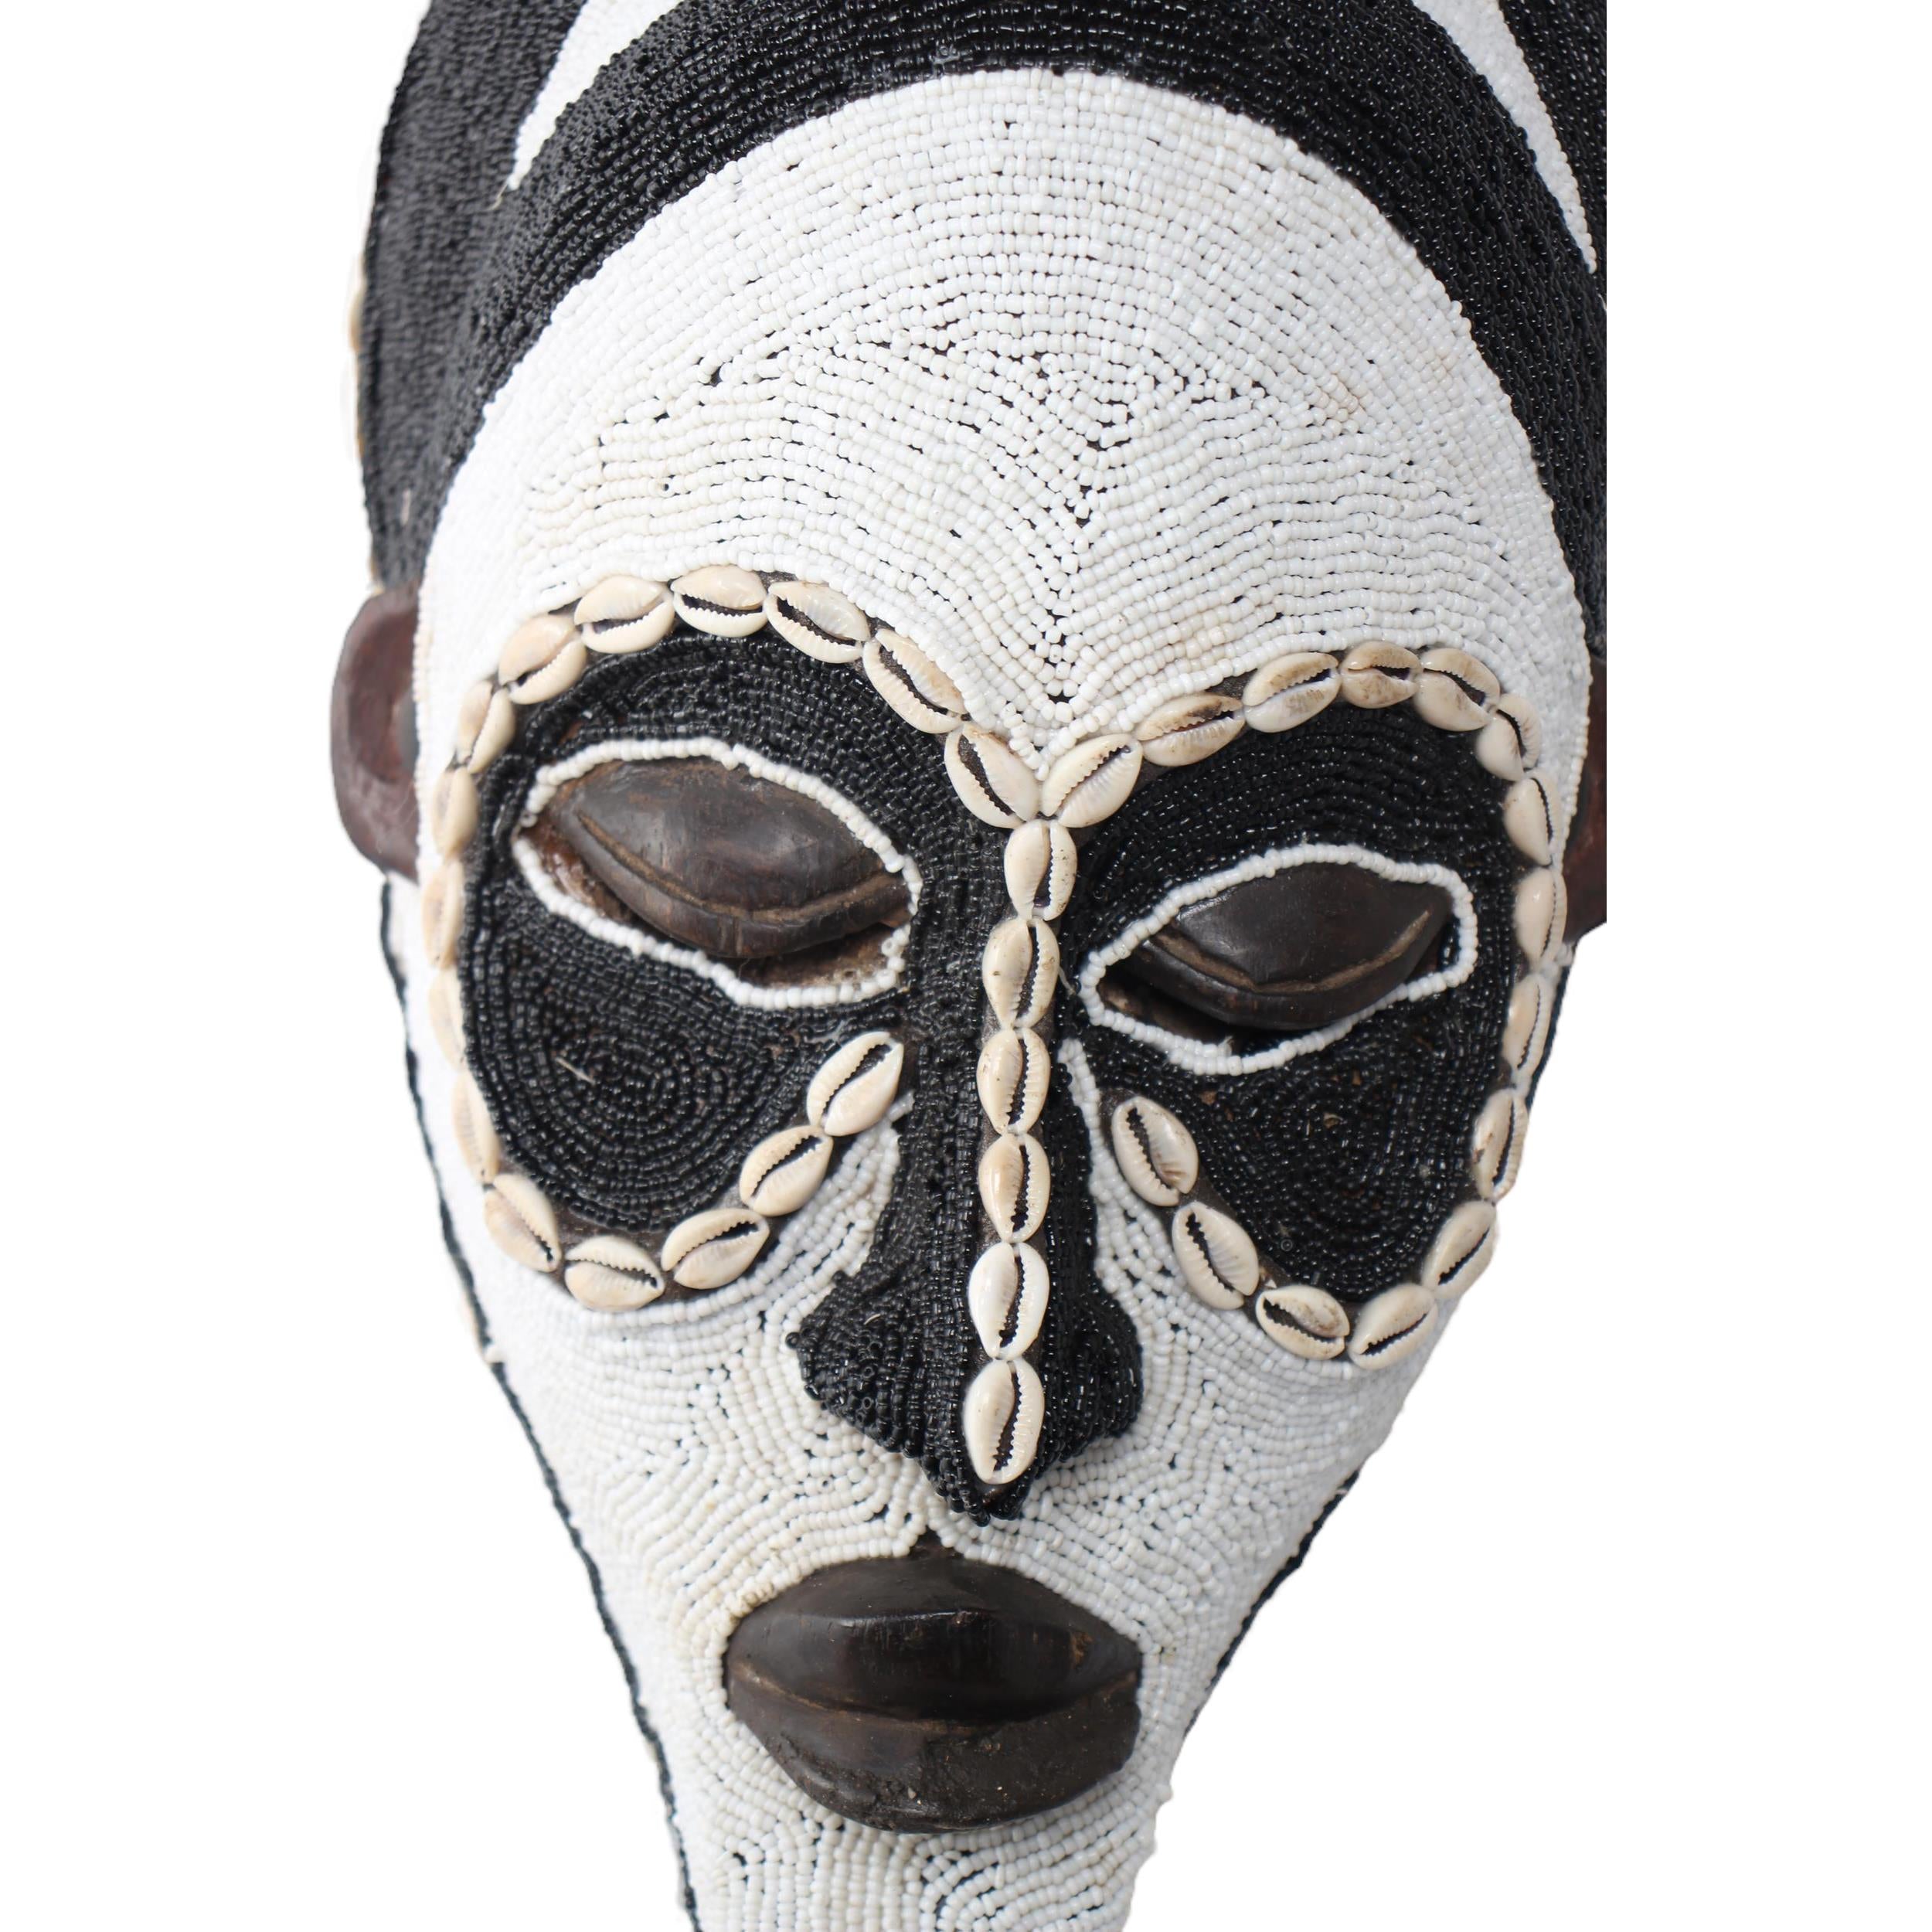 Chokwe Tribe Mask ~15.4" Tall - Mask